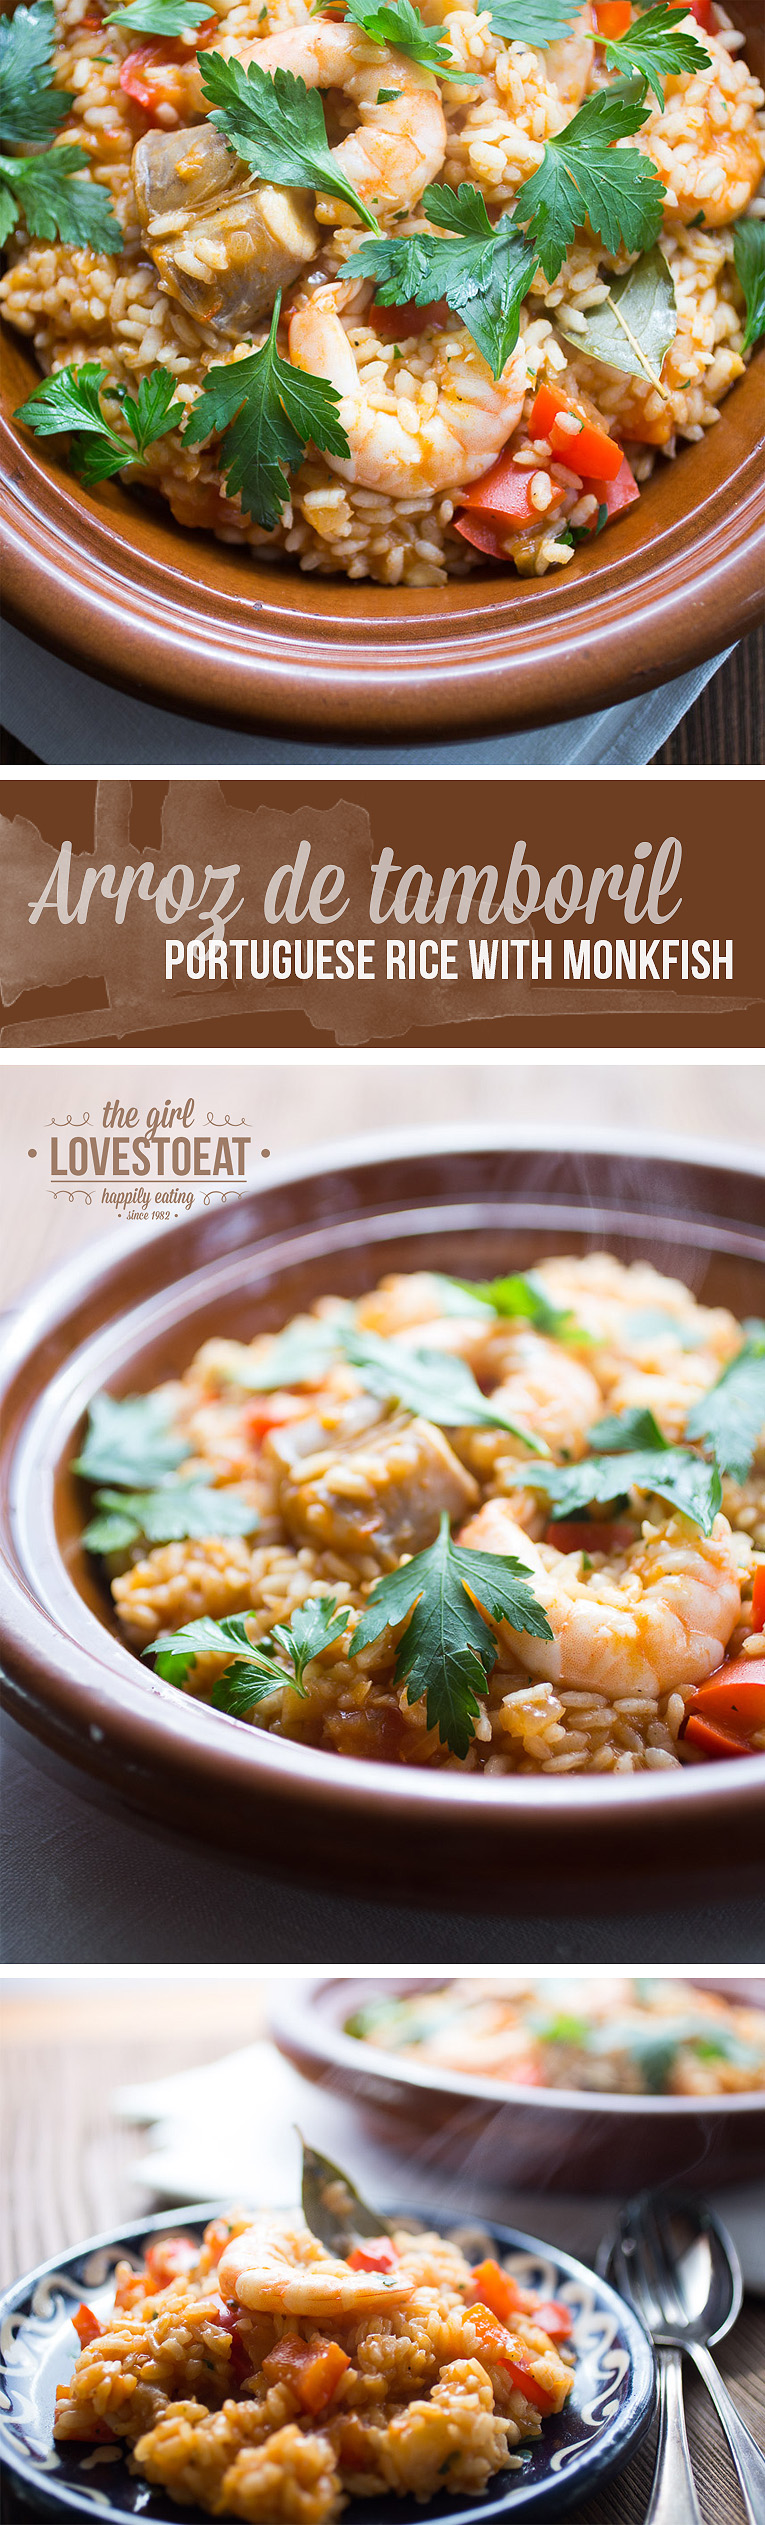 Arroz de tamboril - Portuguese rice with monkfish